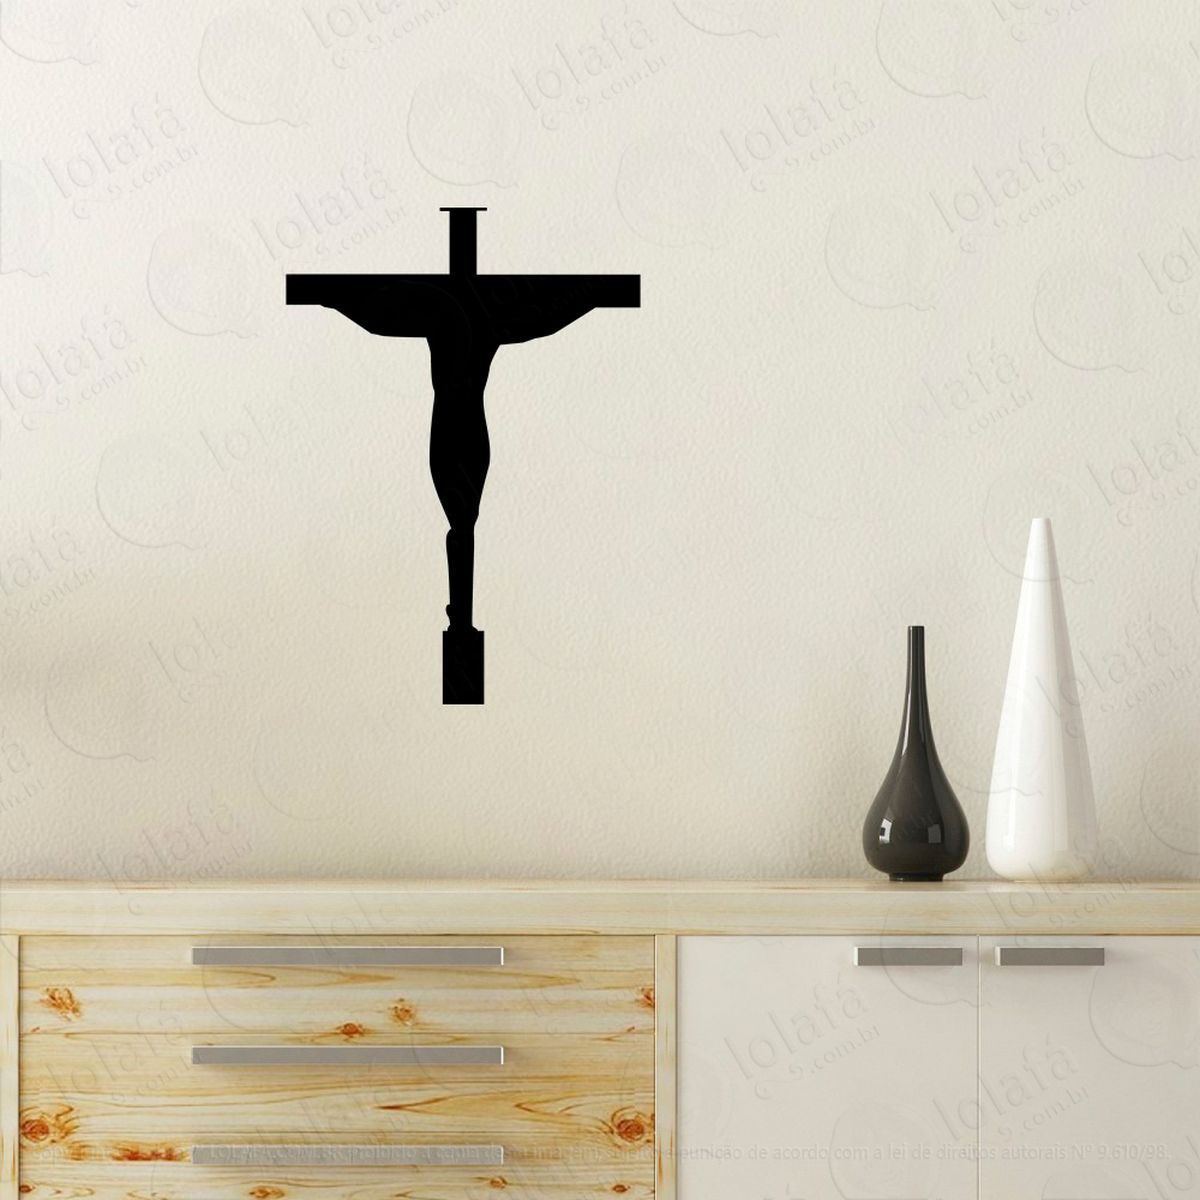 jesus cristo adesivo de parede decorativo para casa, quarto, sala e vidro - mod:61